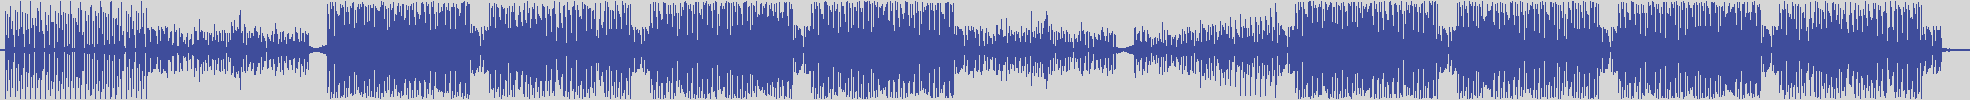 nf_boyz_records [NFY009] Alpha Carpet - Visions [Jeff Collins Mix] audio wave form